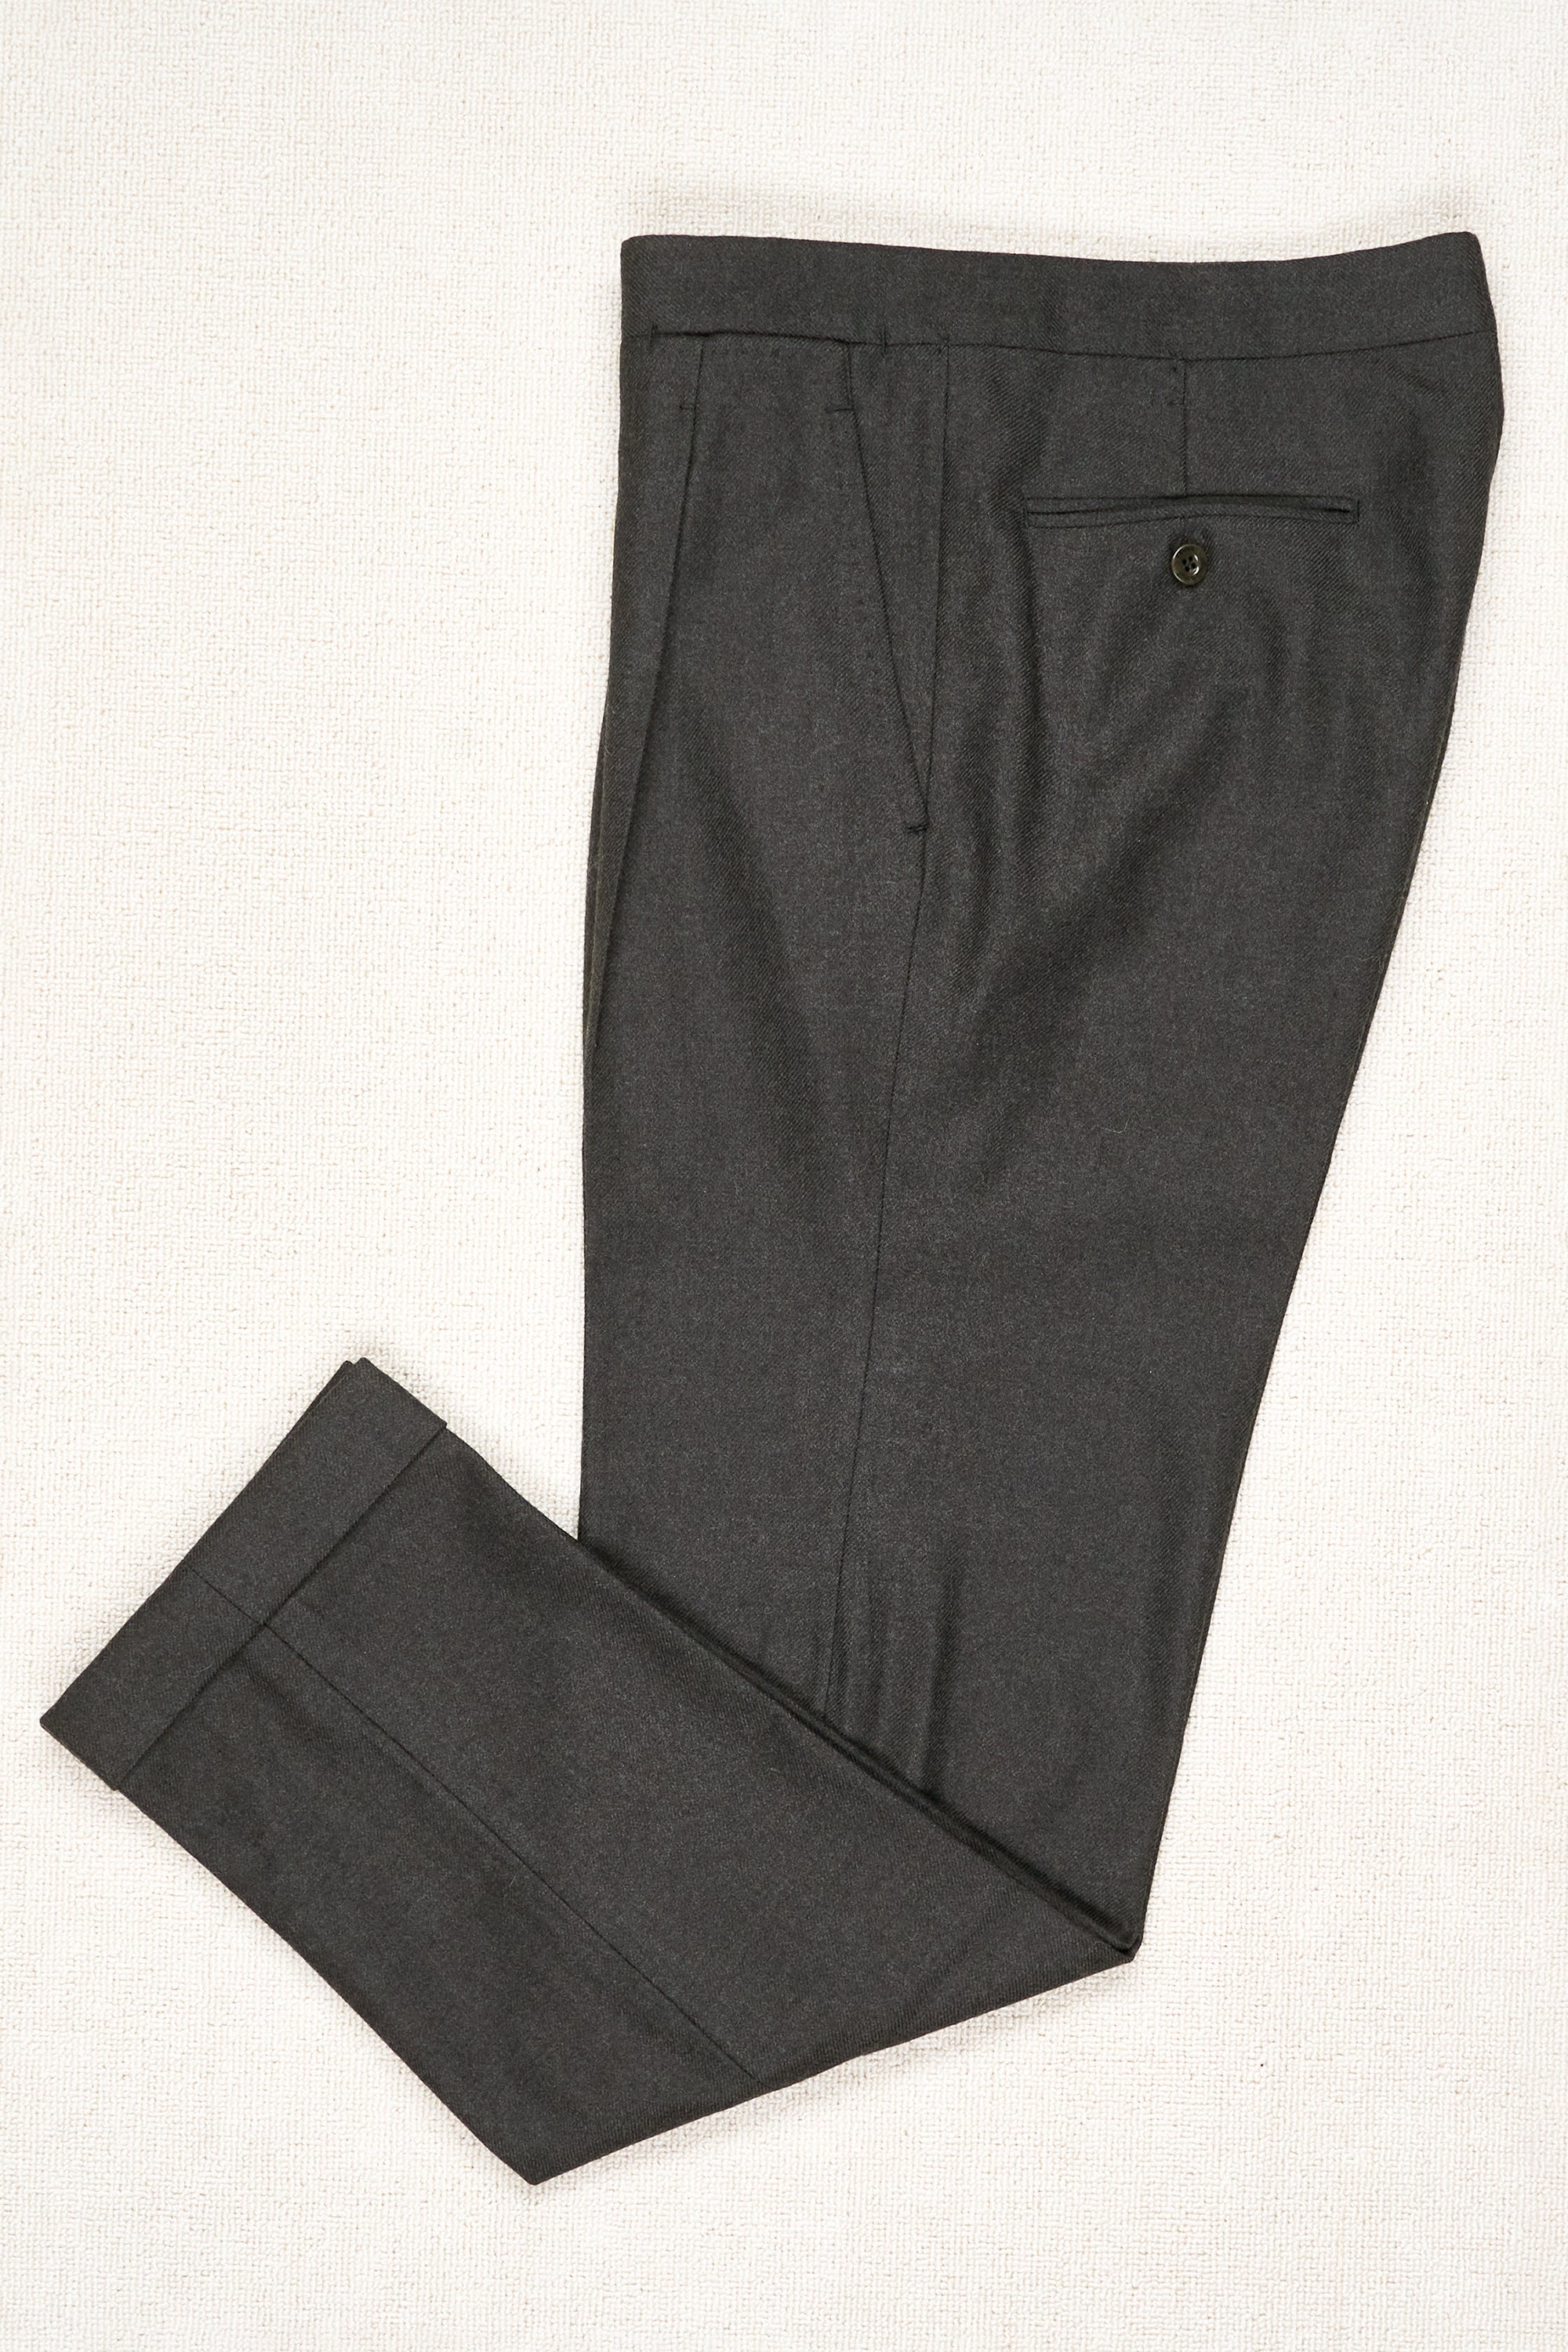 Ambrosi Napoli Dark Grey Twill Wool Single-Pleat Trousers